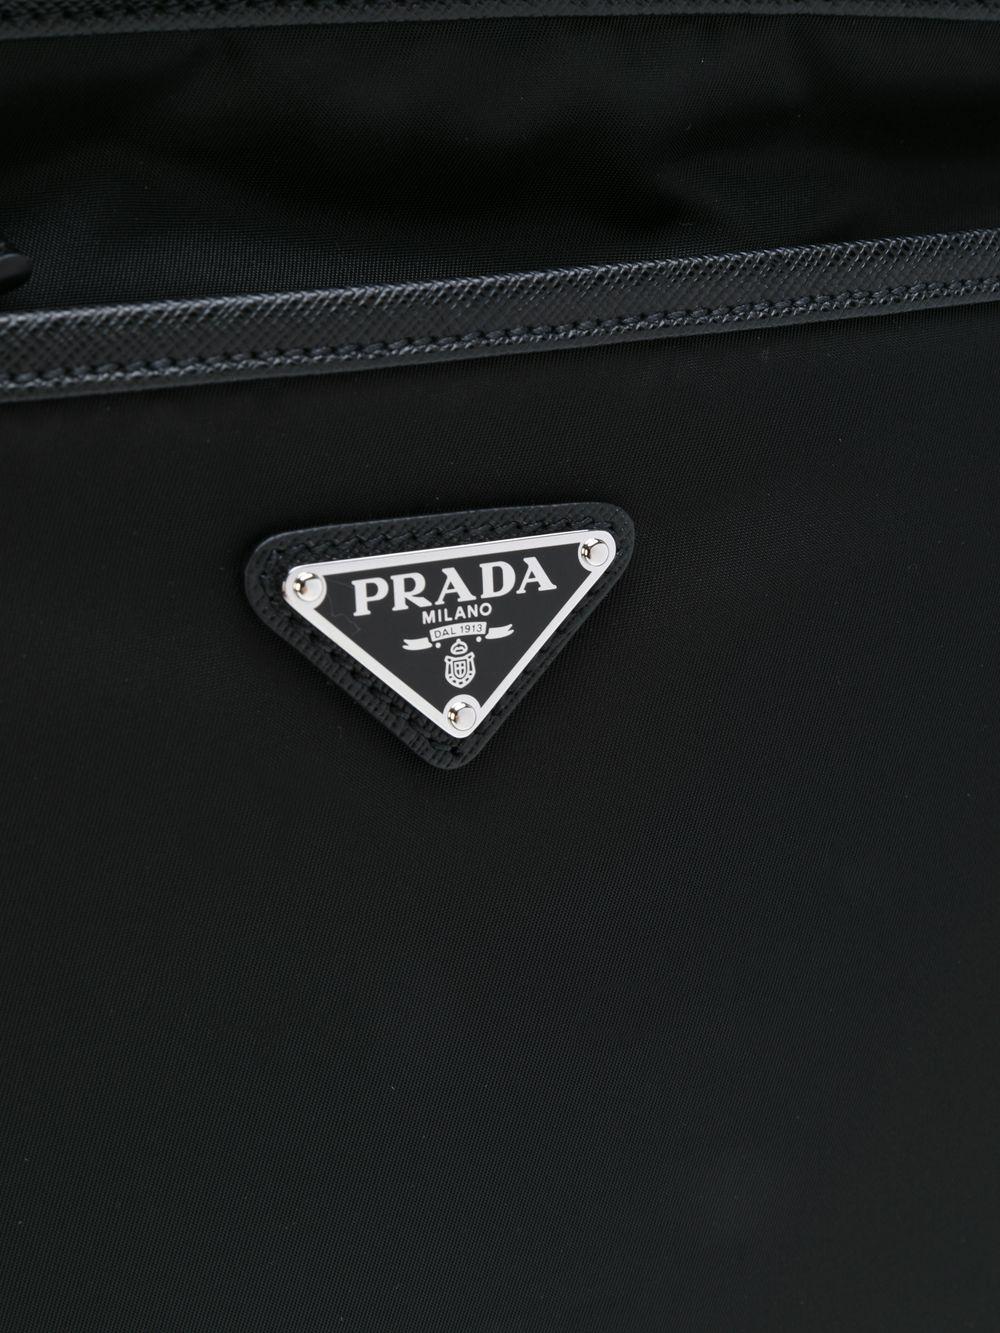 Prada Nylon Shoulder Bag in Black for Men - Lyst